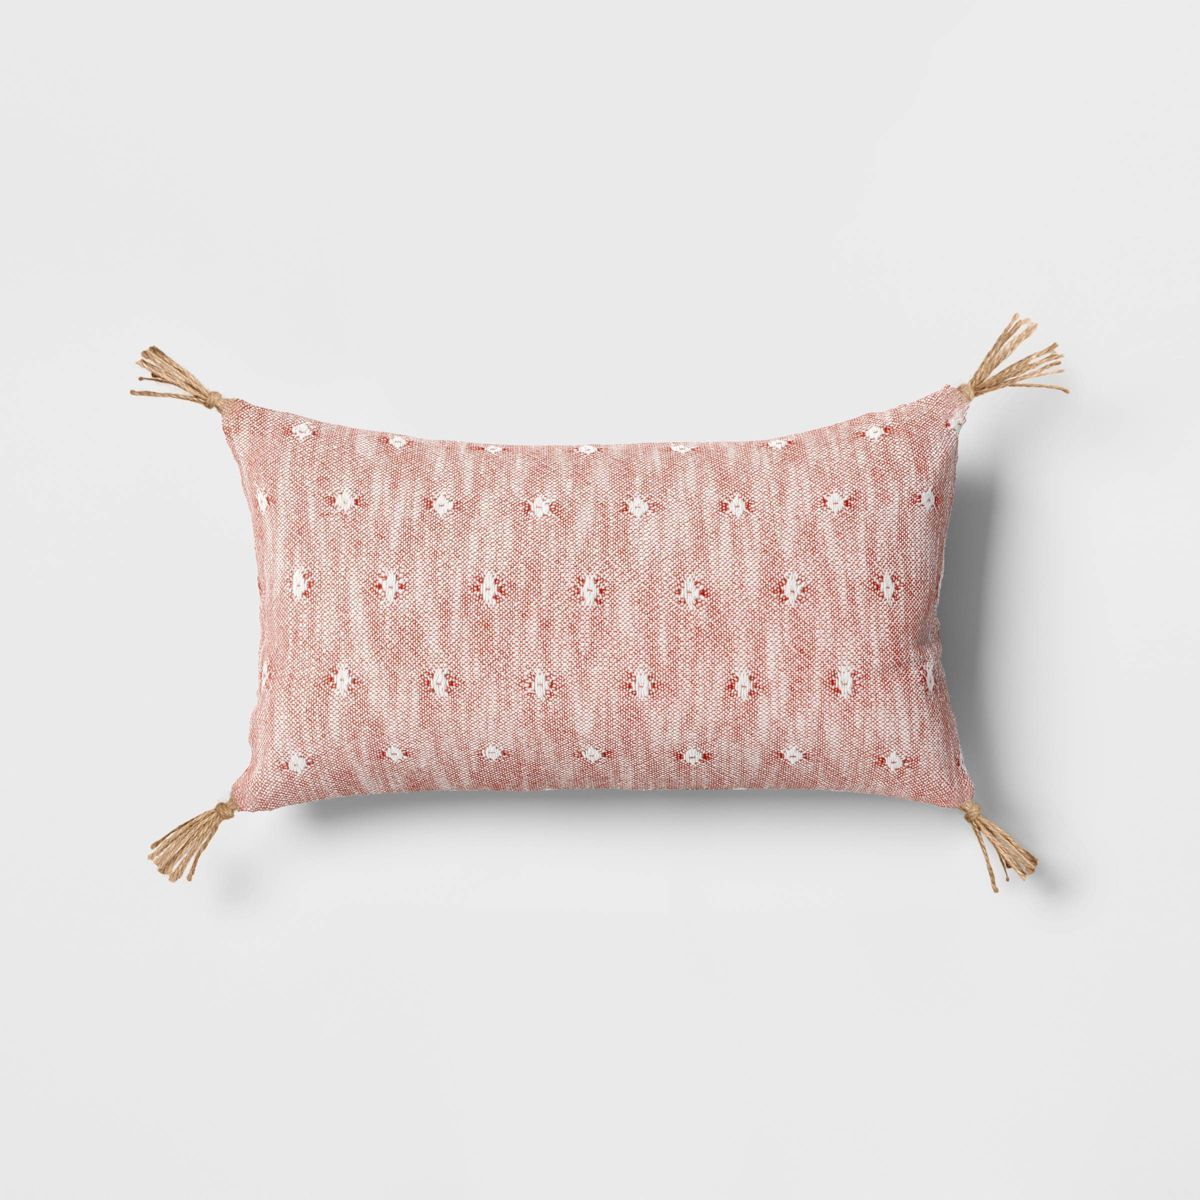 Oversize Woven Jacquard Lumbar Throw Pillow with Tassels - Threshold™ | Target